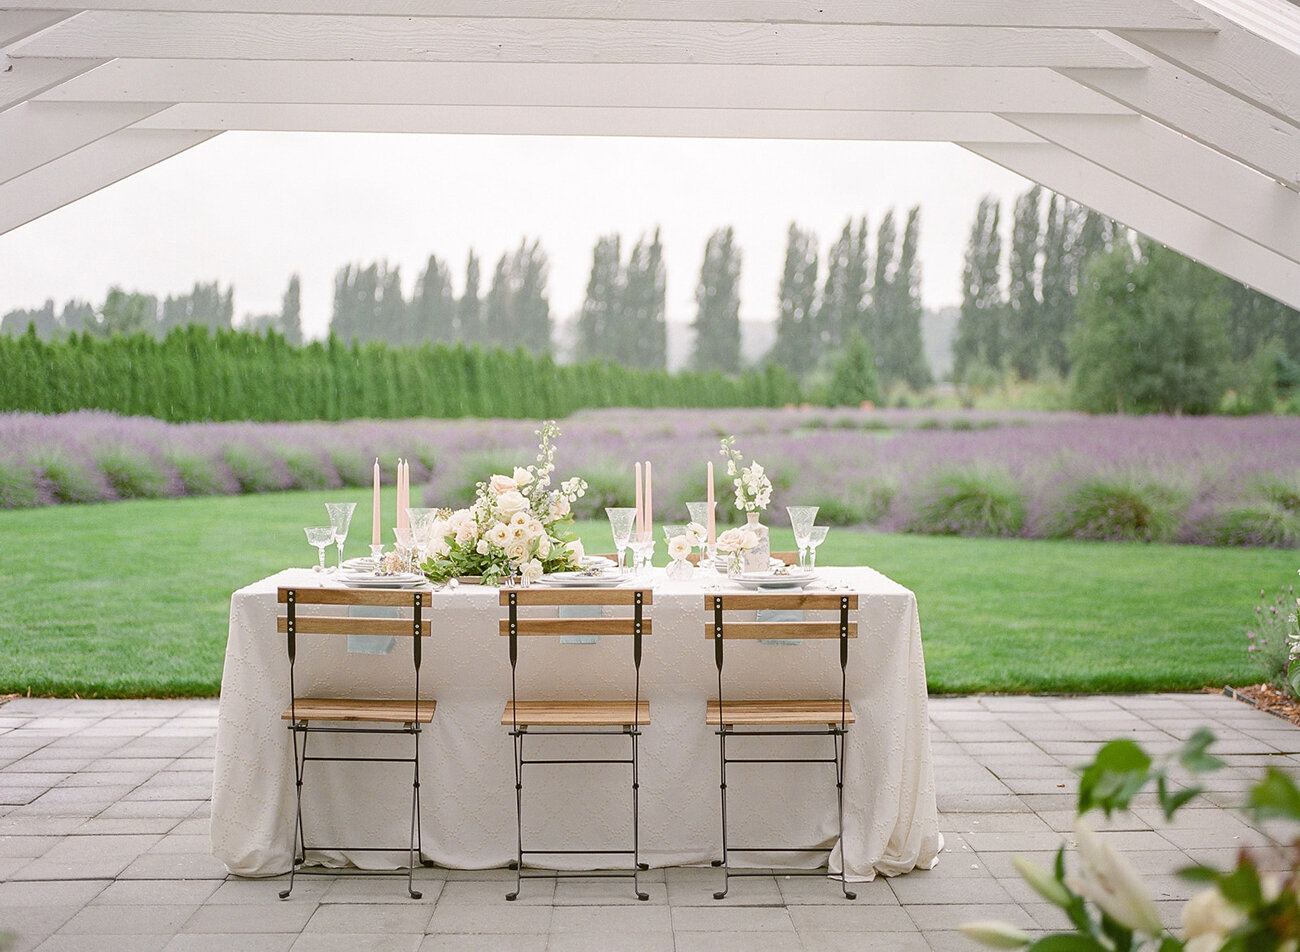 Woodinville Lavender Farm - Kerry Jeanne Photography - Bond in Bloom.jpg